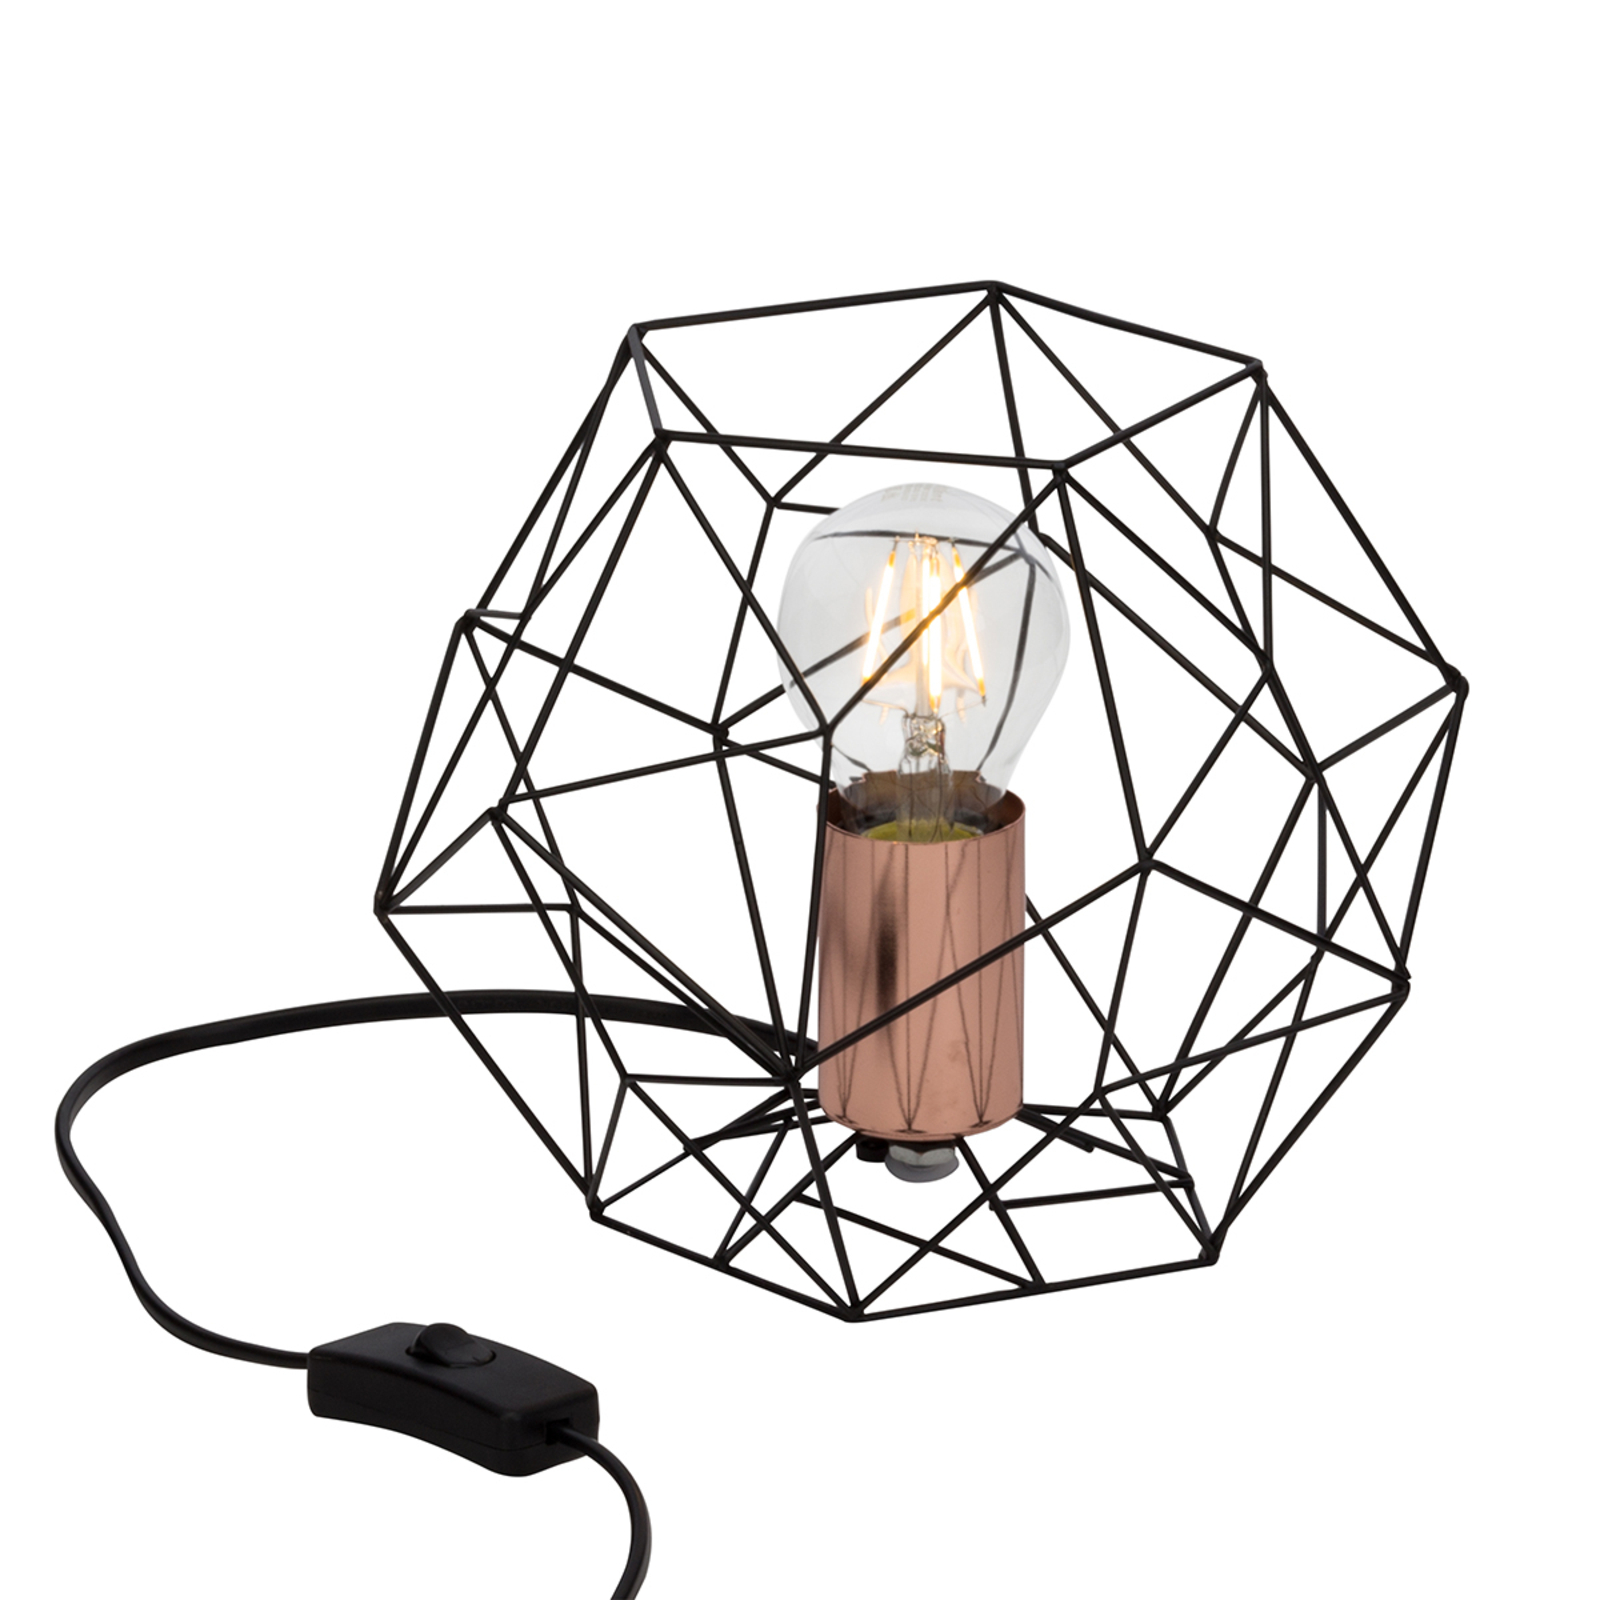 Synergy - lampada da tavolo dal look interessante